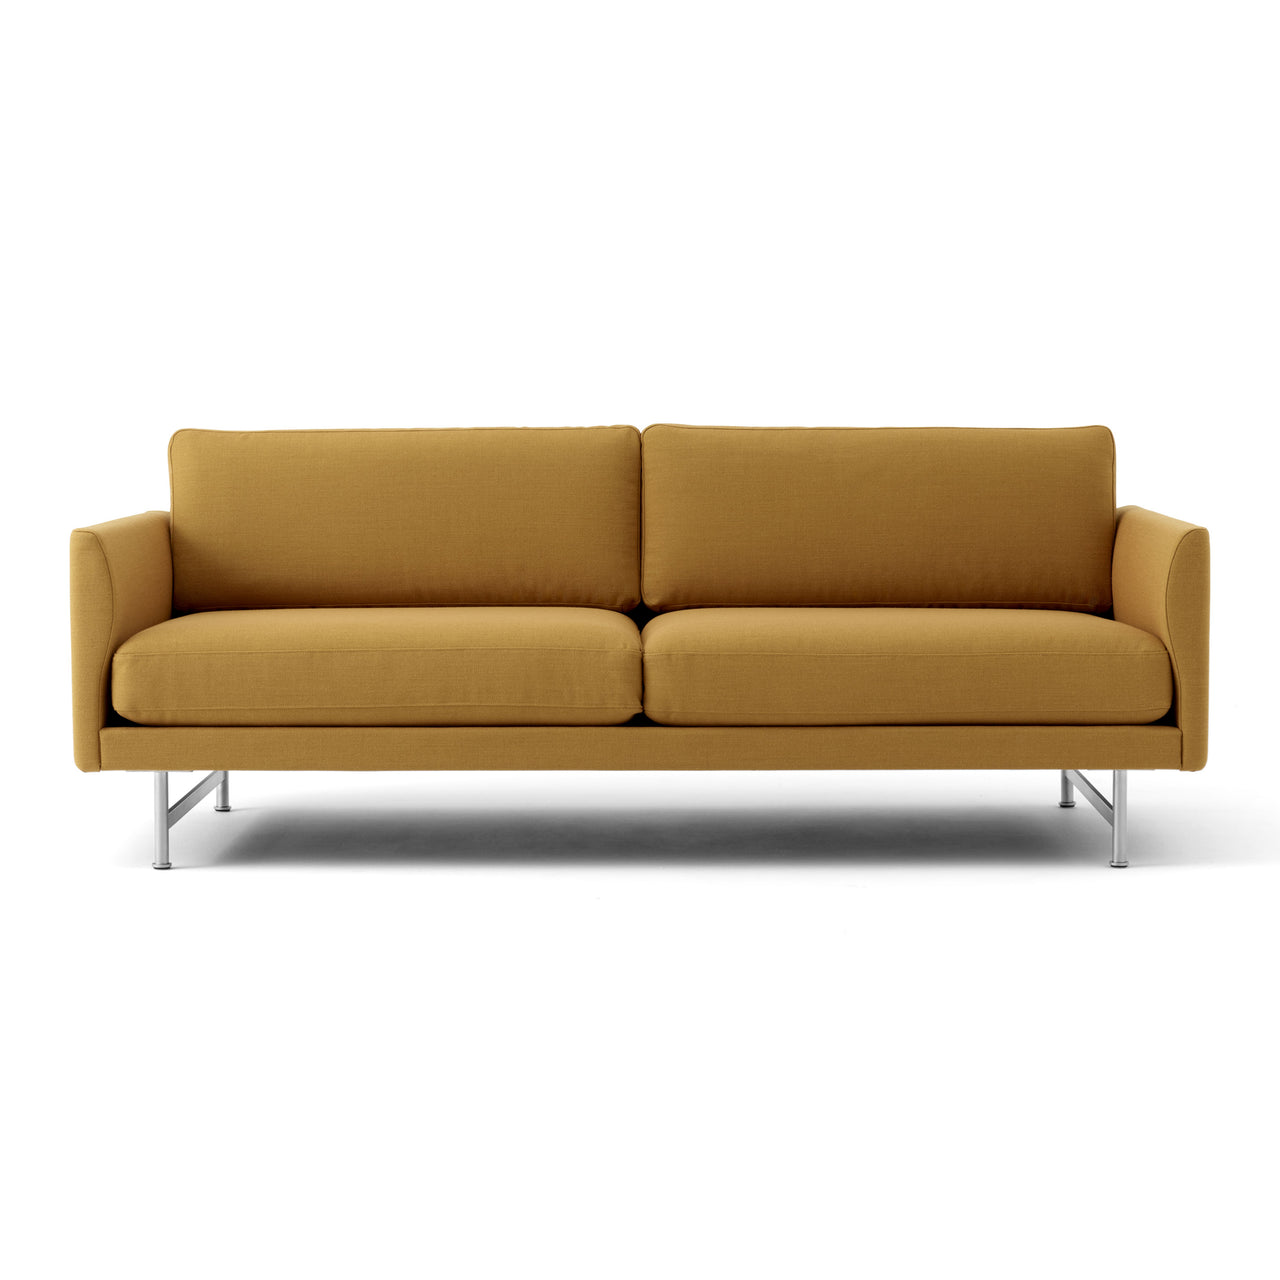 Calmo 2 Seater Sofa: Metal Base